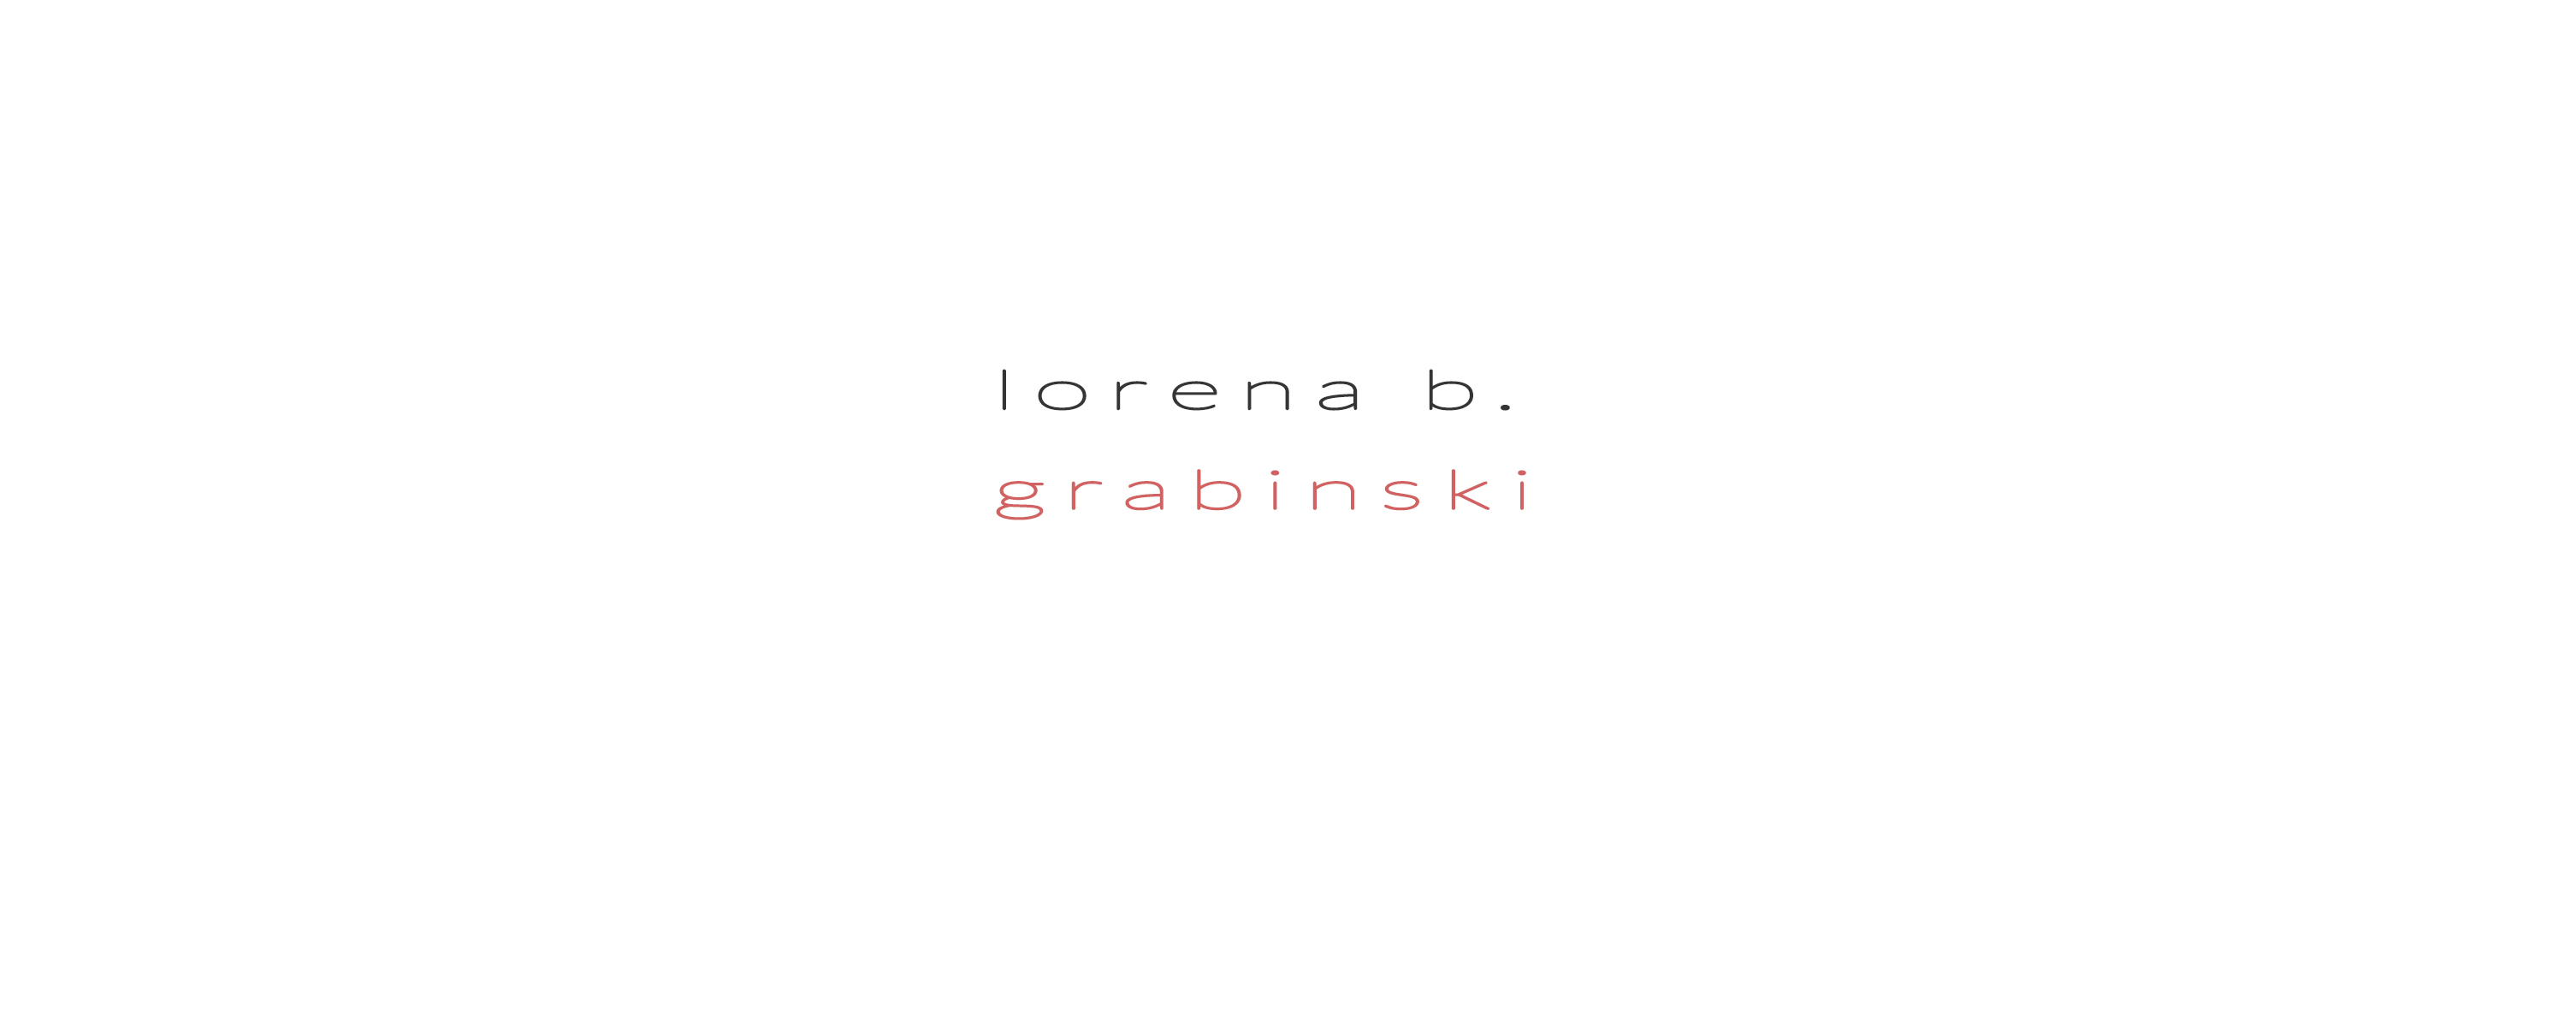 lorena b. grabinski